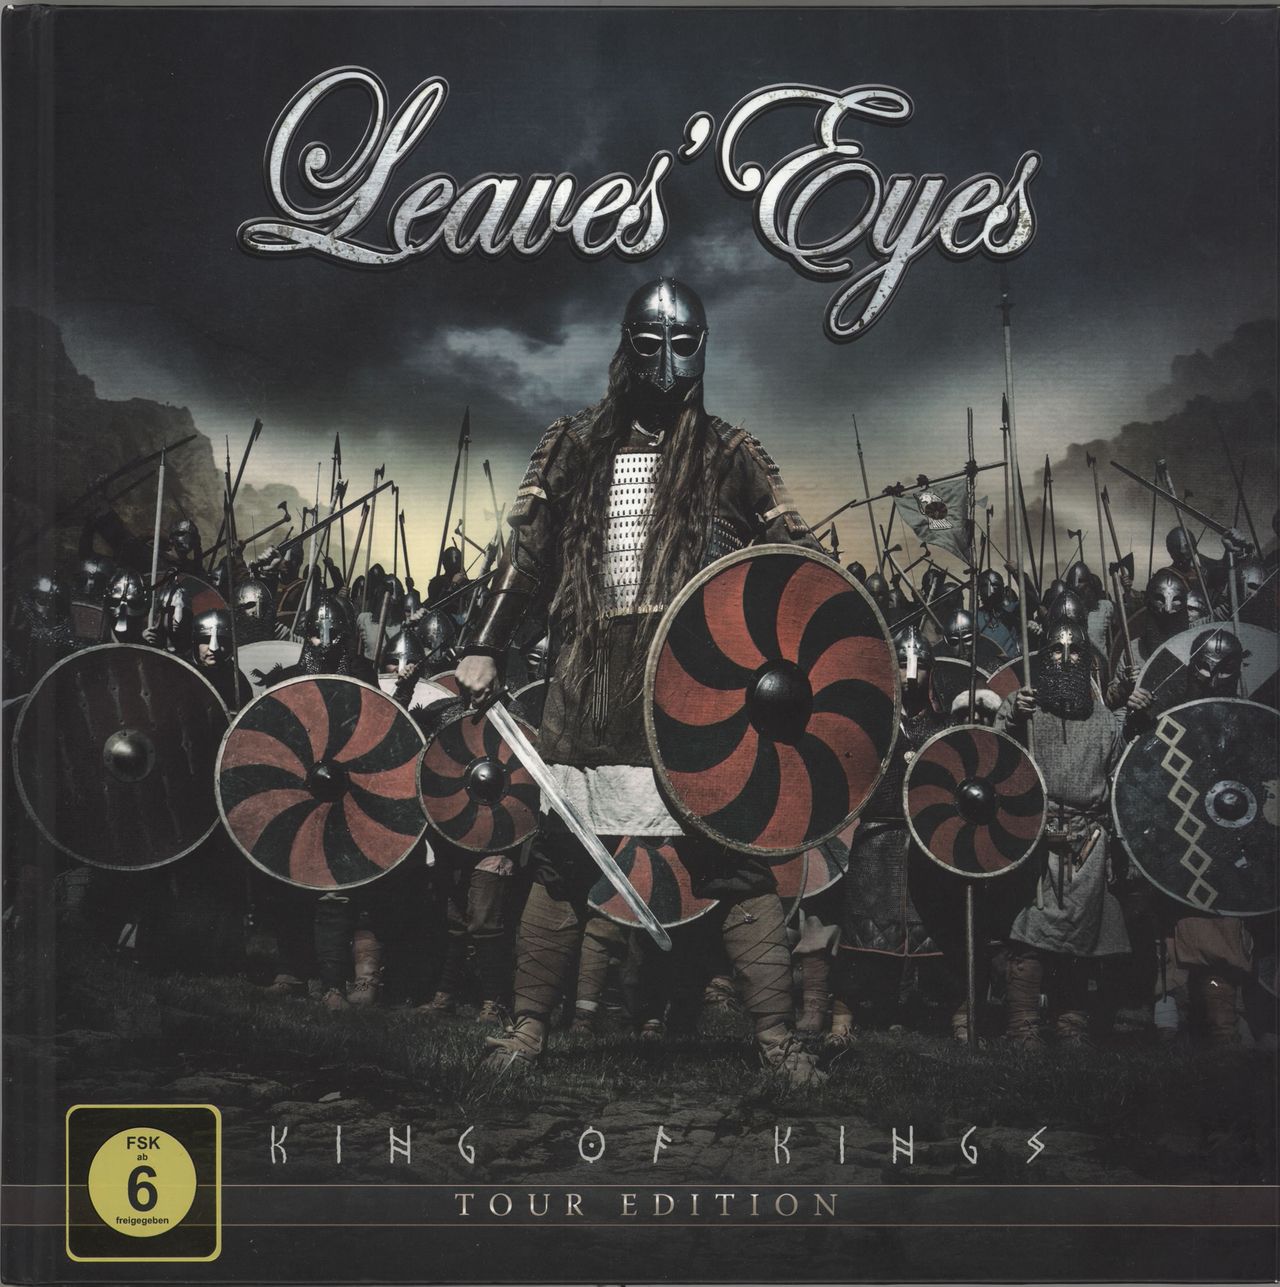 Leaves' Eyes King Of Kings - Tour Edition German 2 CD album set (Double CD) AFM 519-91